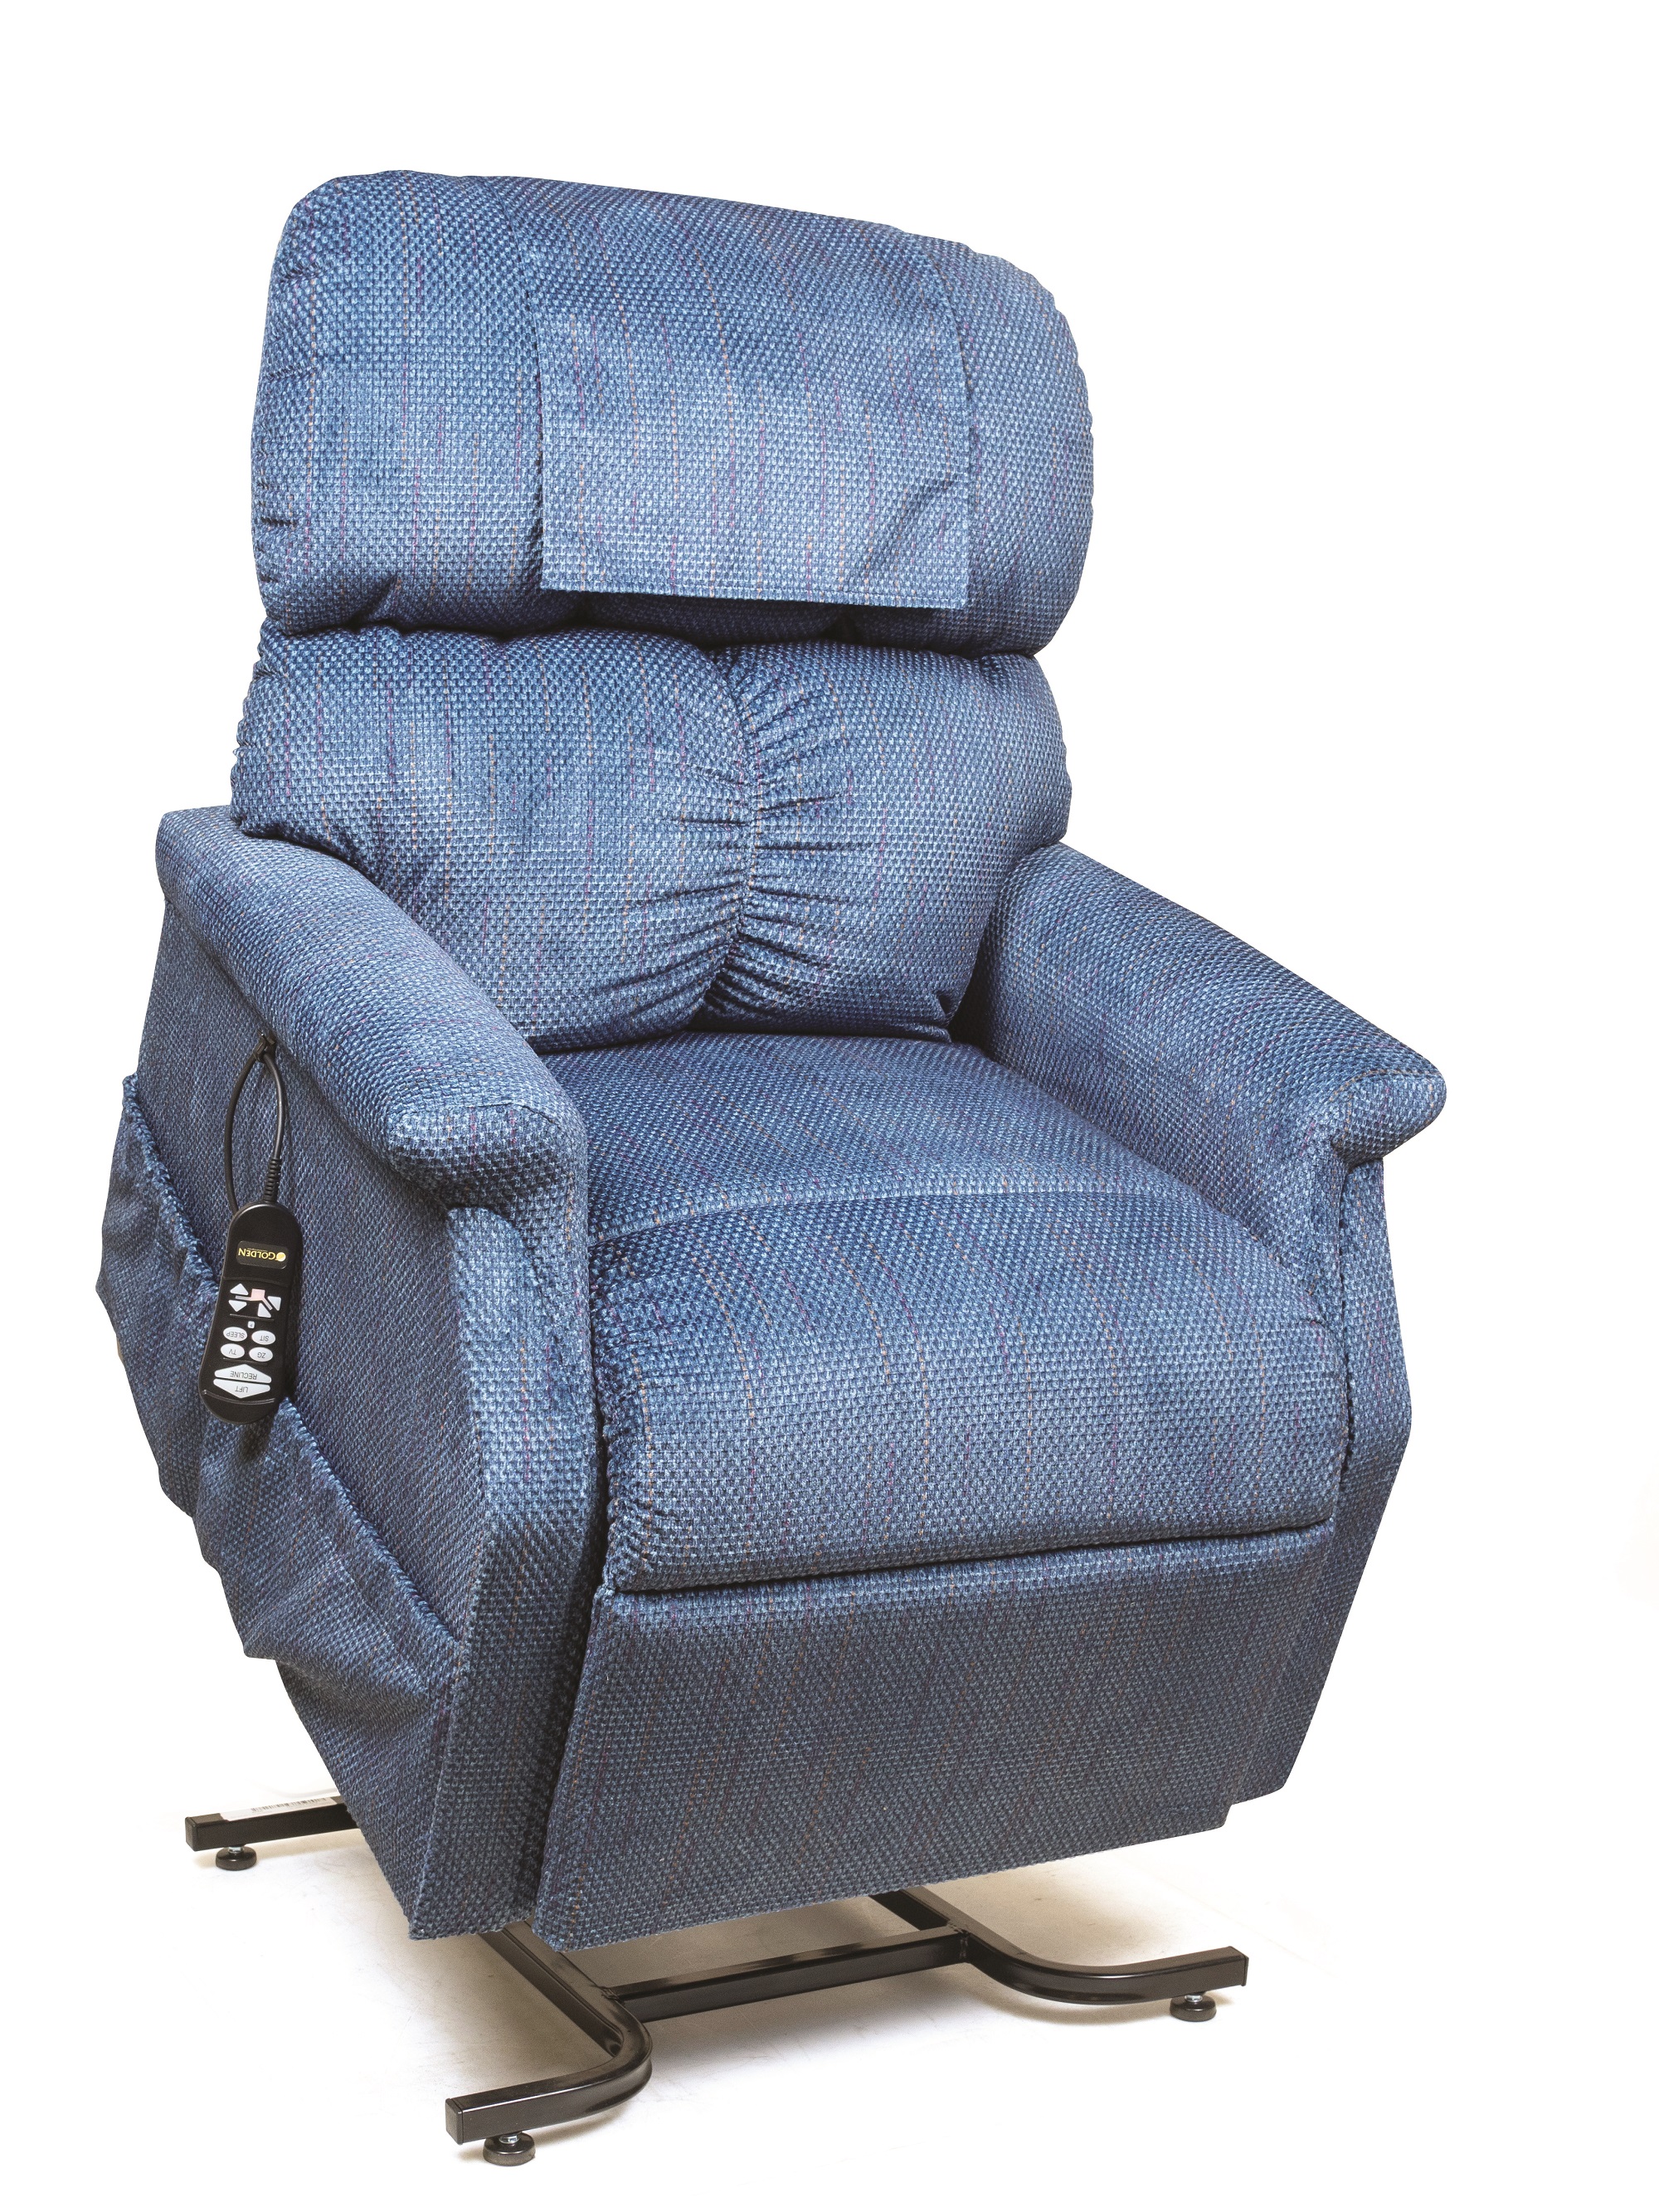 Photo of Golden Technologies Infinite Comforter Lift Chair, Size Medium